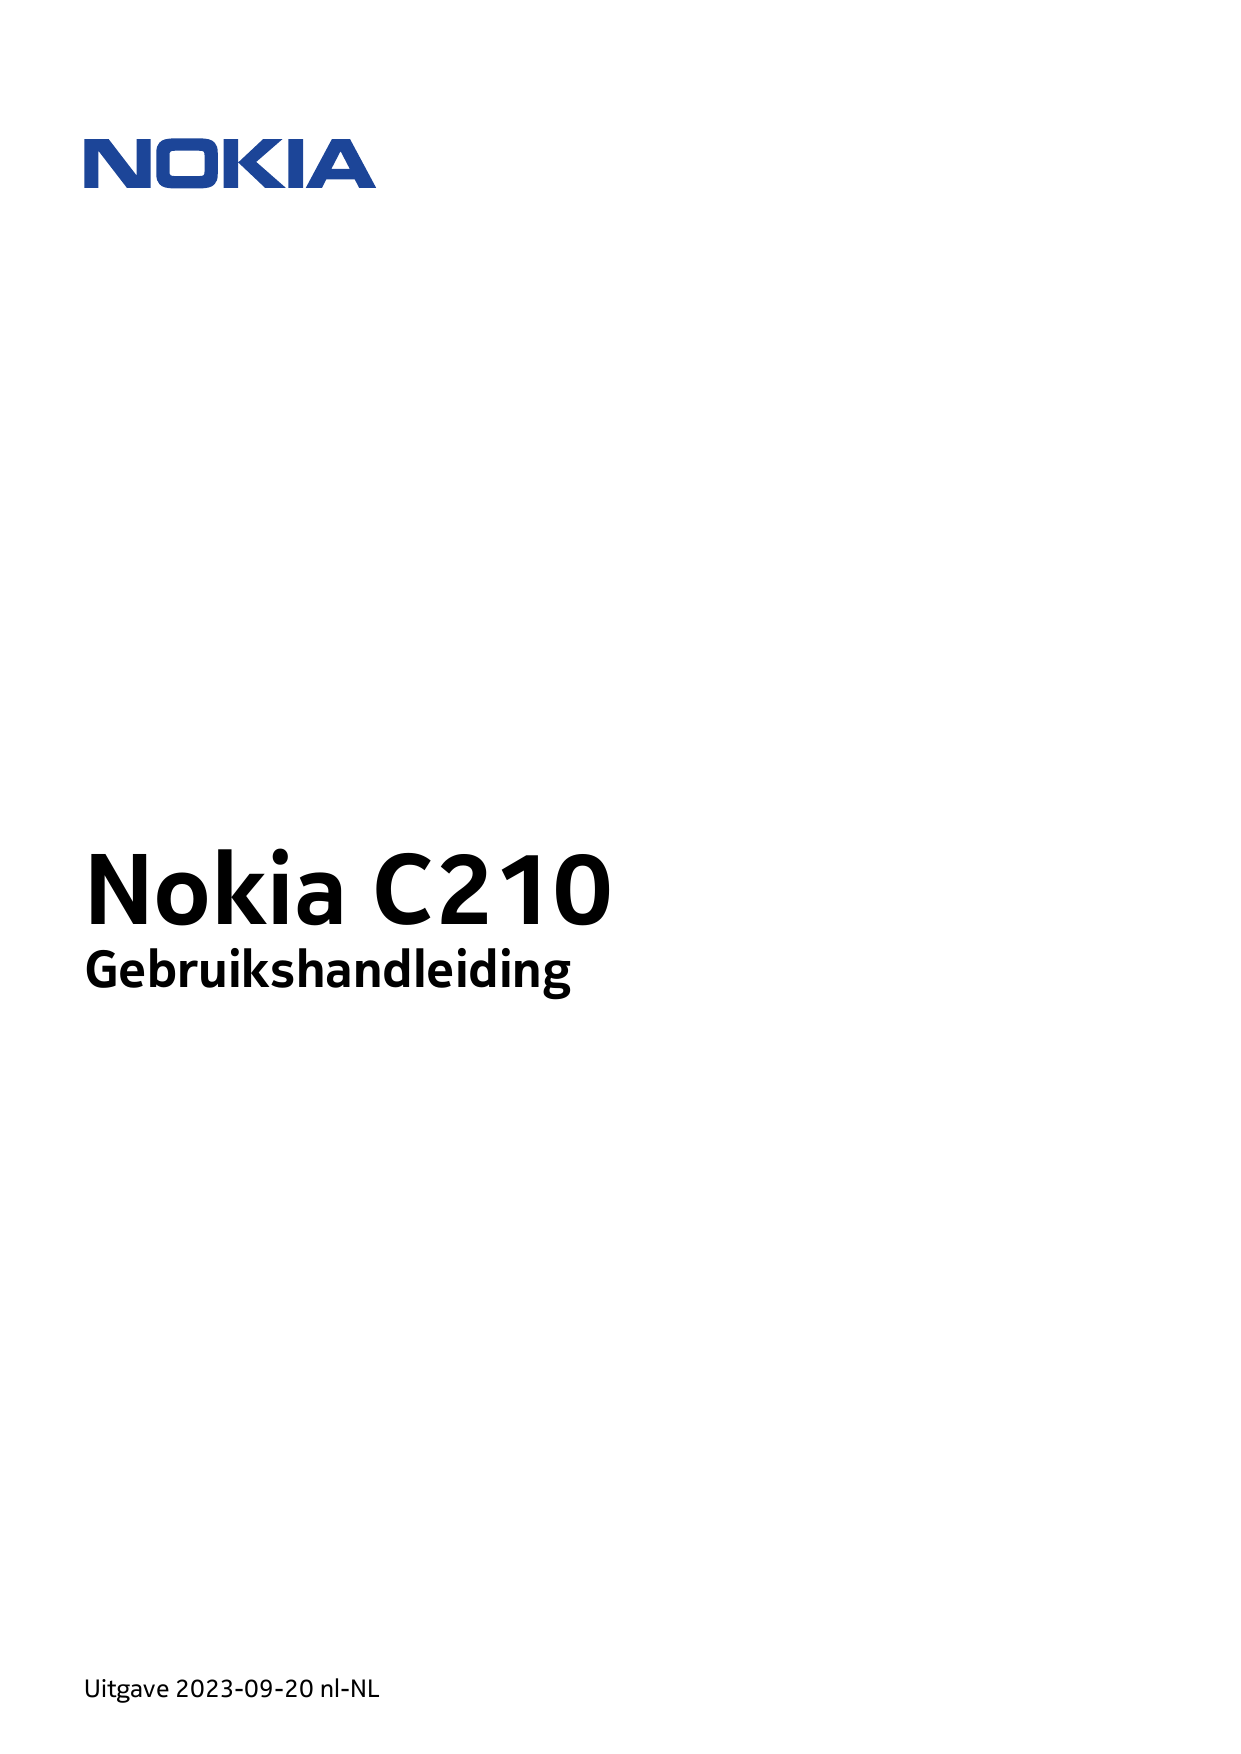 Nokia C210GebruikshandleidingUitgave 2023-09-20 nl-NL